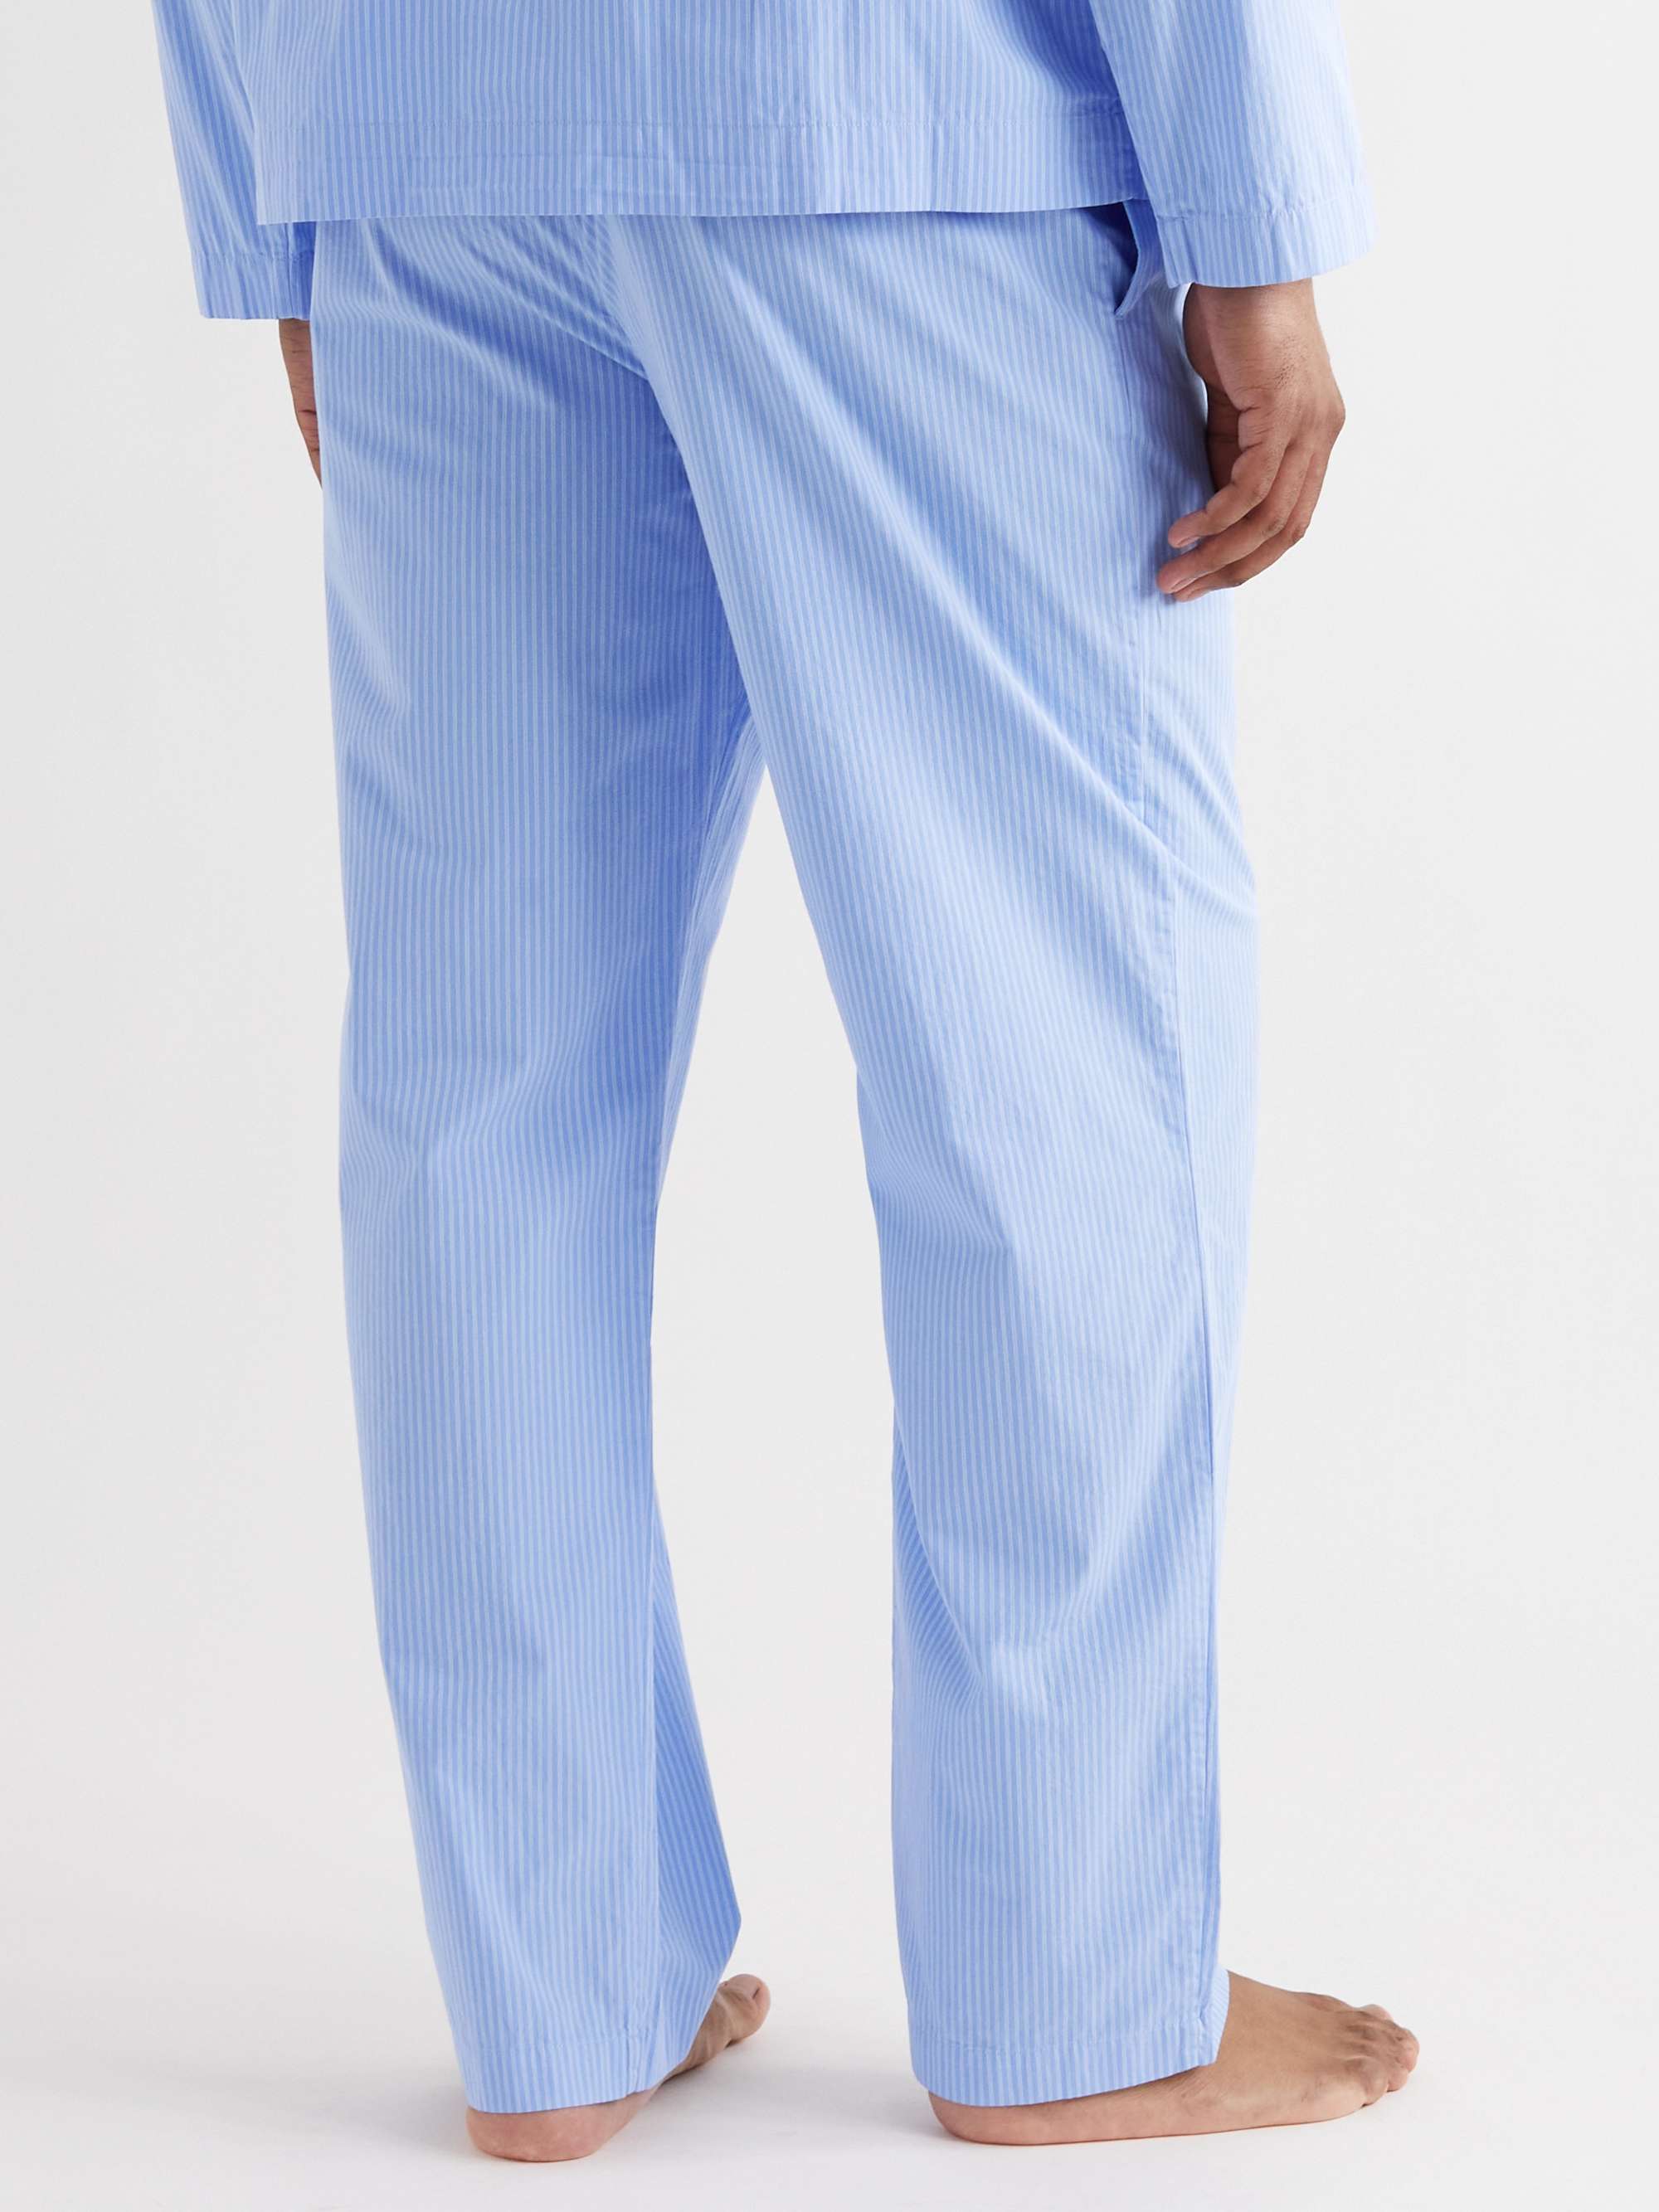 Organic Cotton-Poplin Pyjama Trousers